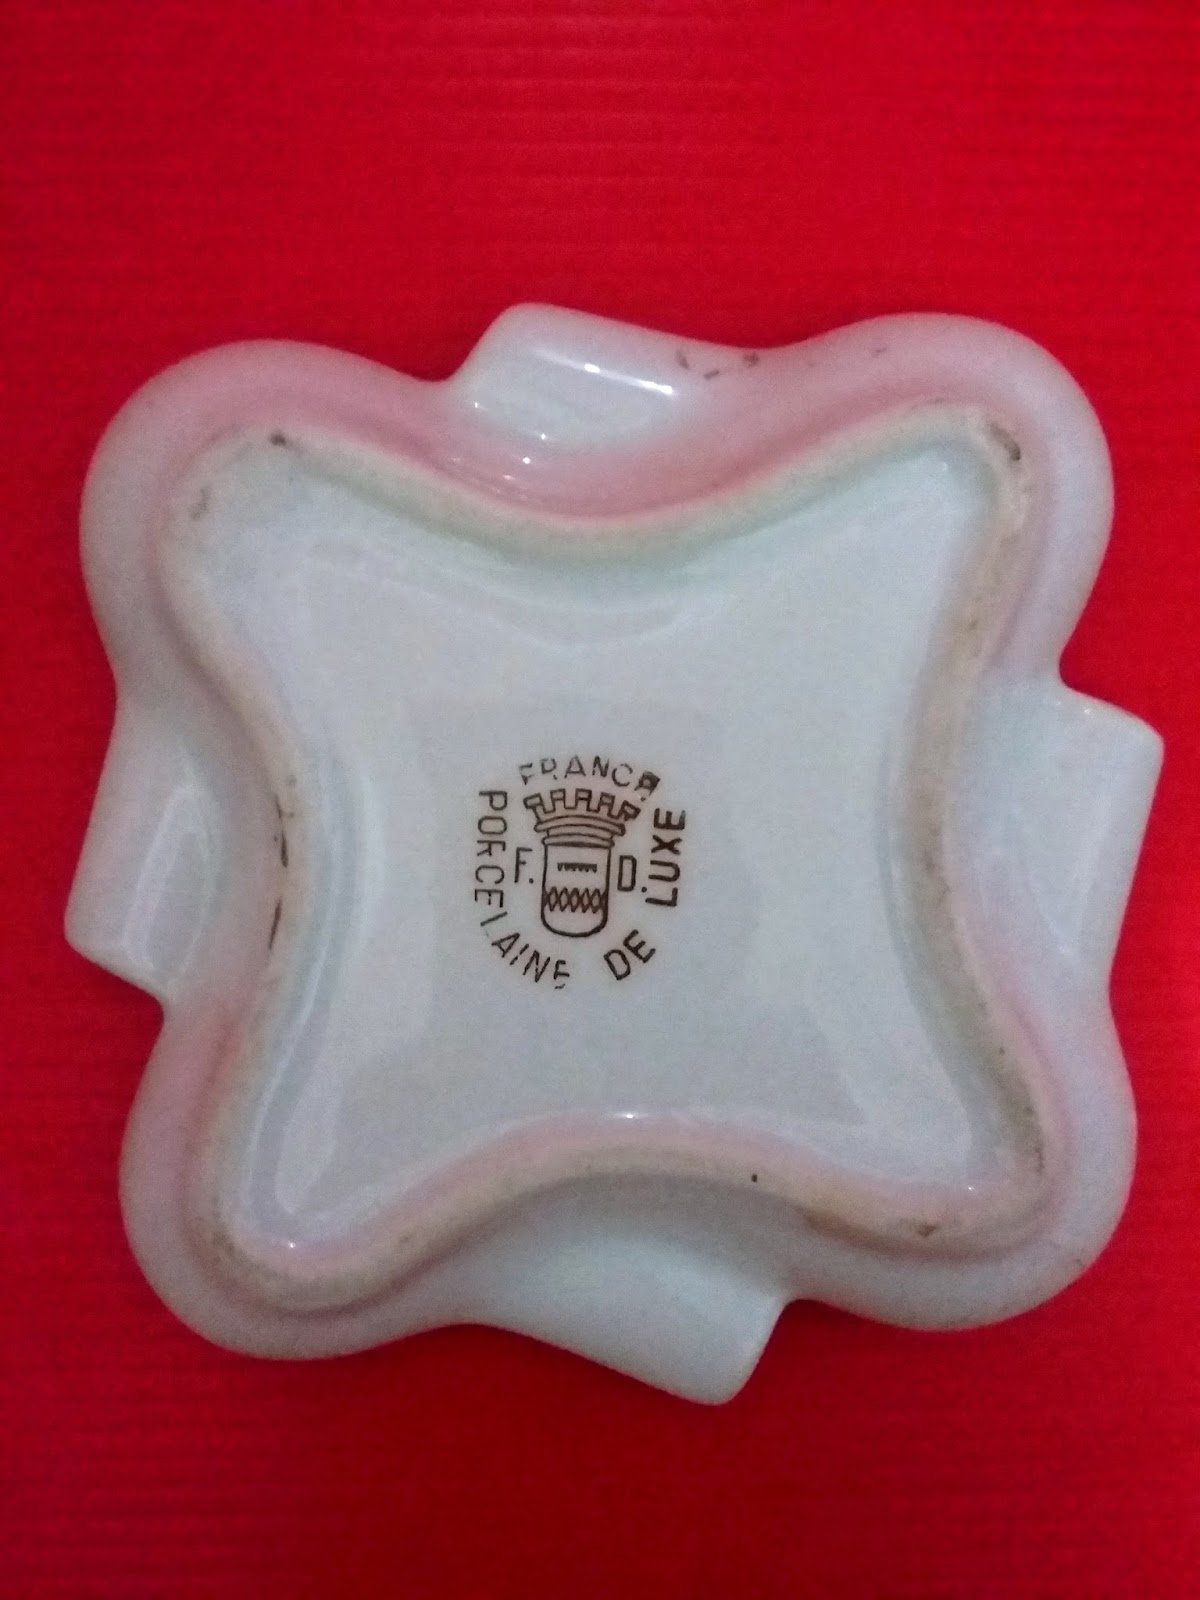 Koleksi Barang Bekas Unik Asbak Porcelaine de France 2